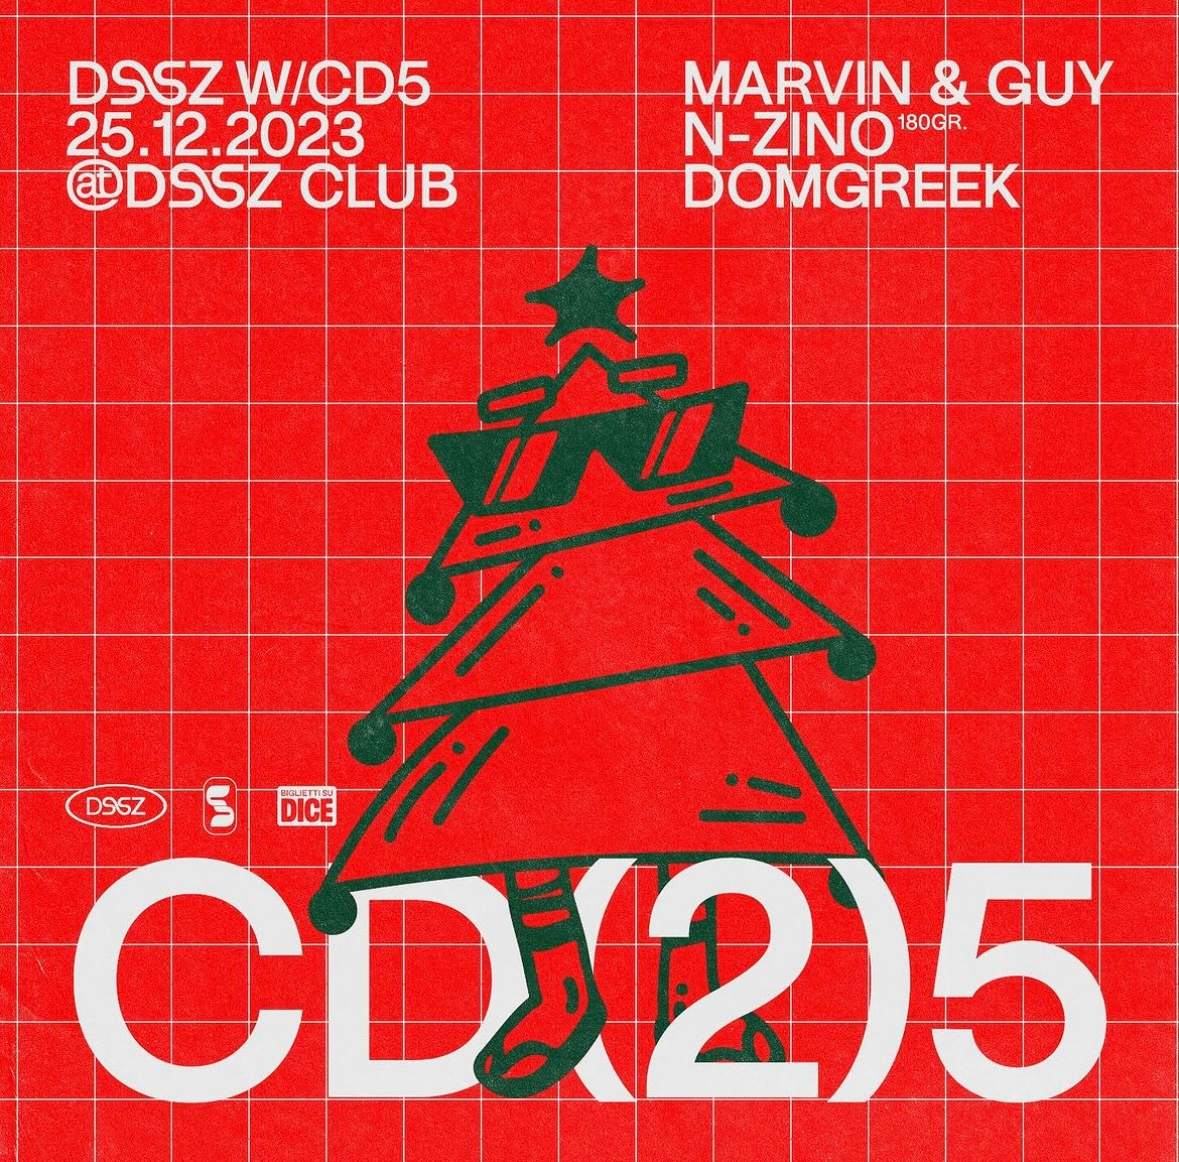 CD(2)5 presenta: Marvin & Guy // N-Zino // Domgreek @DSSZ Club - フライヤー表